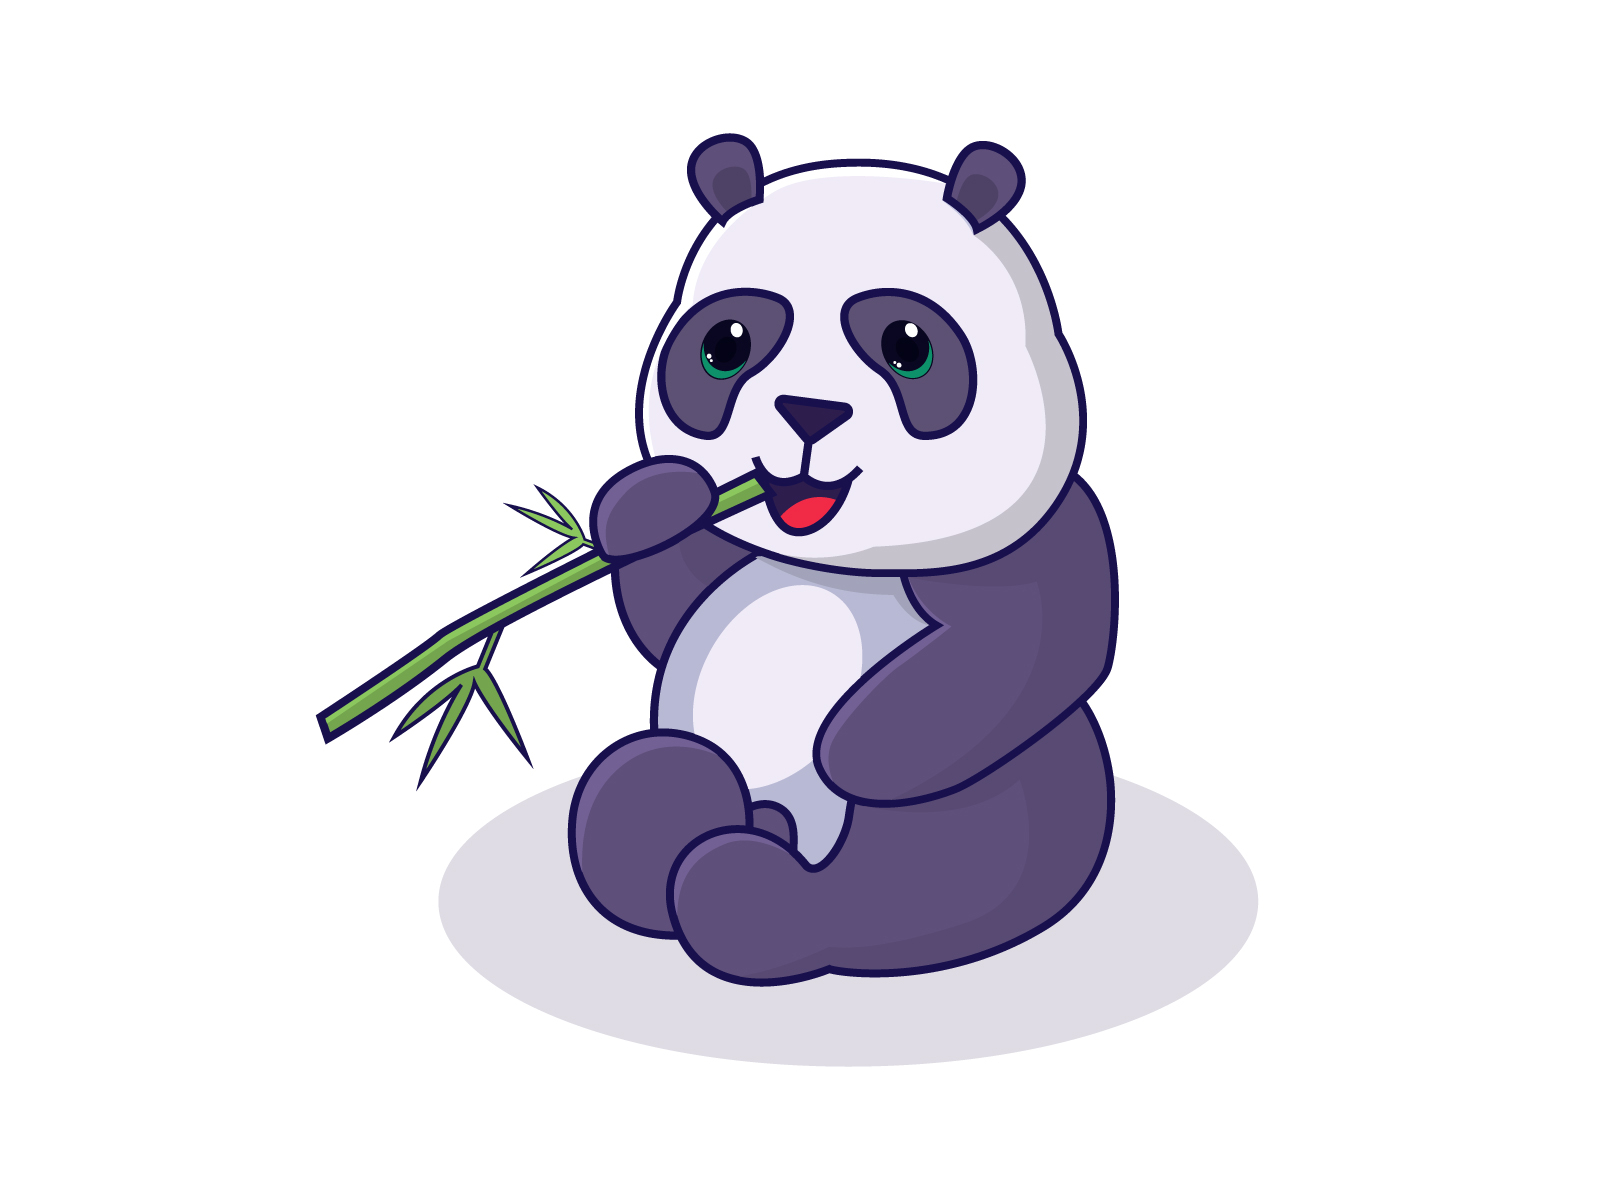 Cute Panda Clipart Vector Illustration by Maimuna Aktar on Dribbble